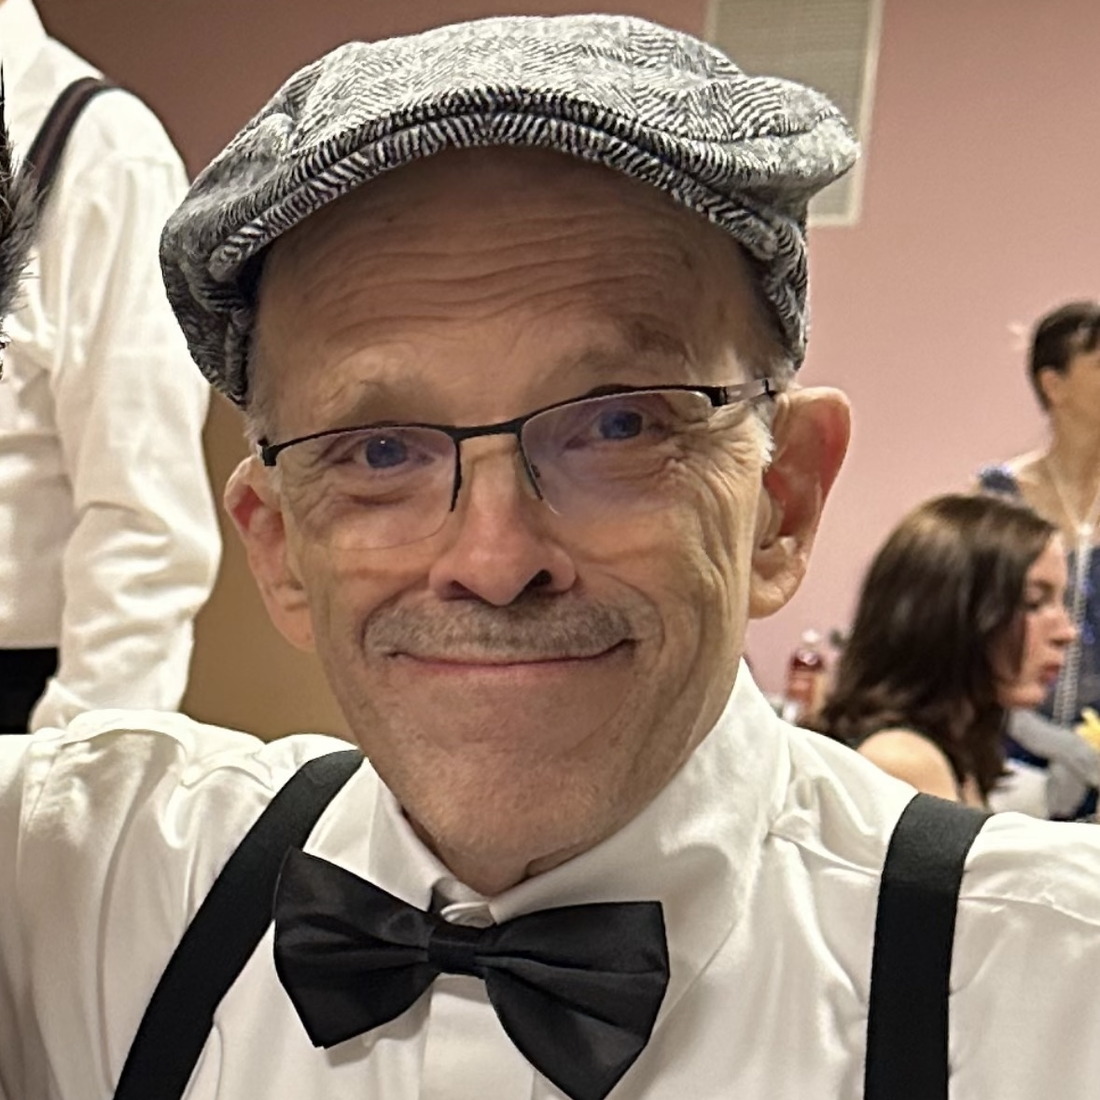 An older gentleman wearing a hat and fancy bowtie